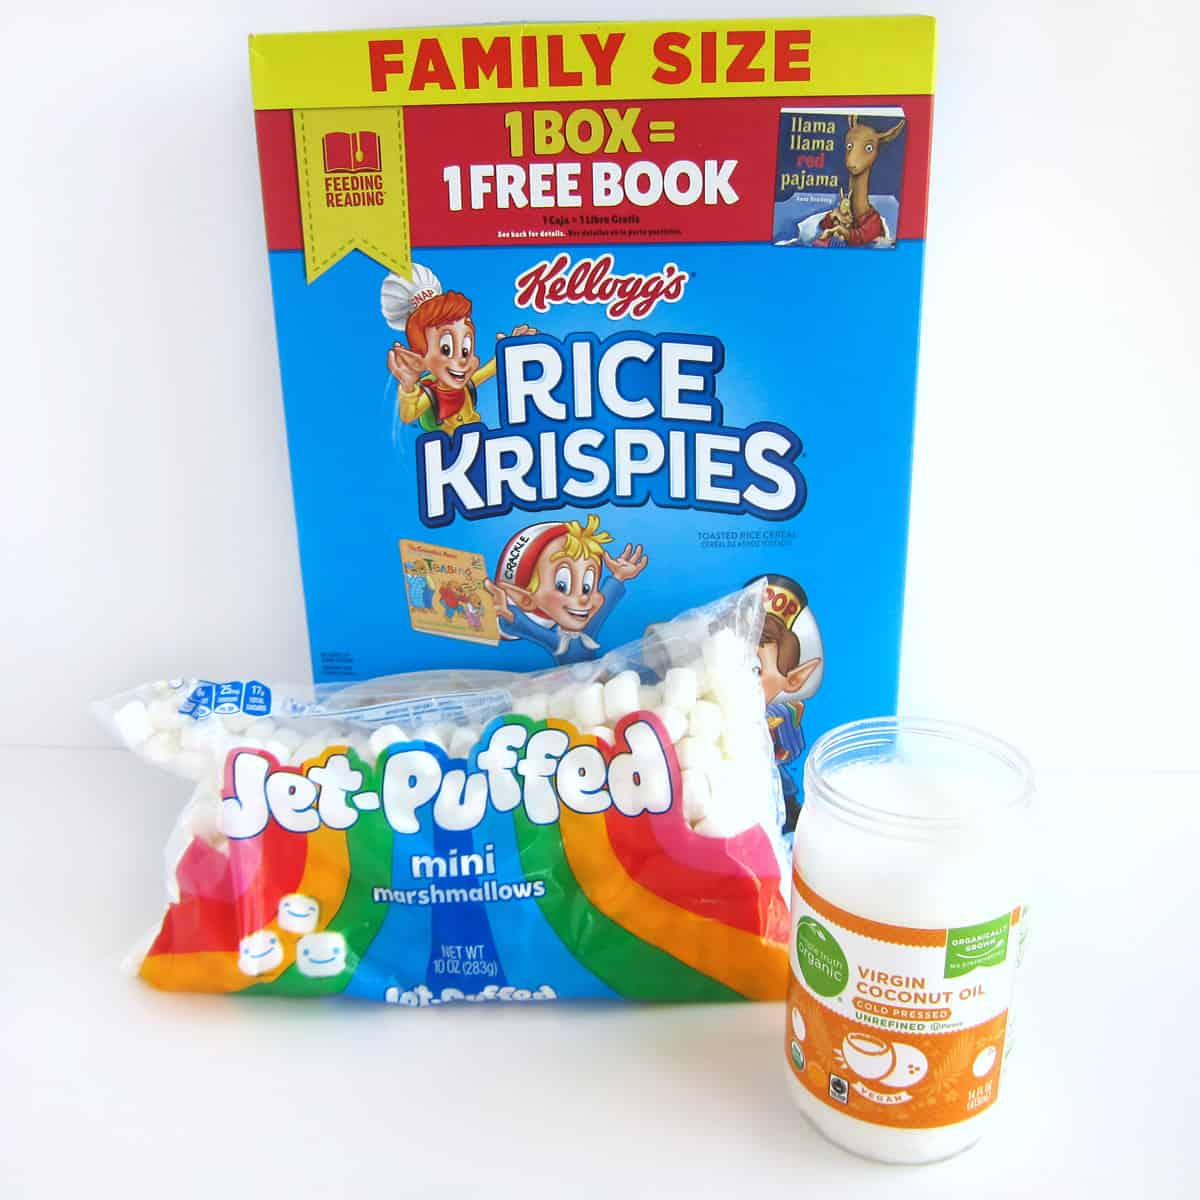 Kellogg's Rice Krispies Cereal, Kraft Jet-Puffed Marshmallows, and Virgin Coconut Oil